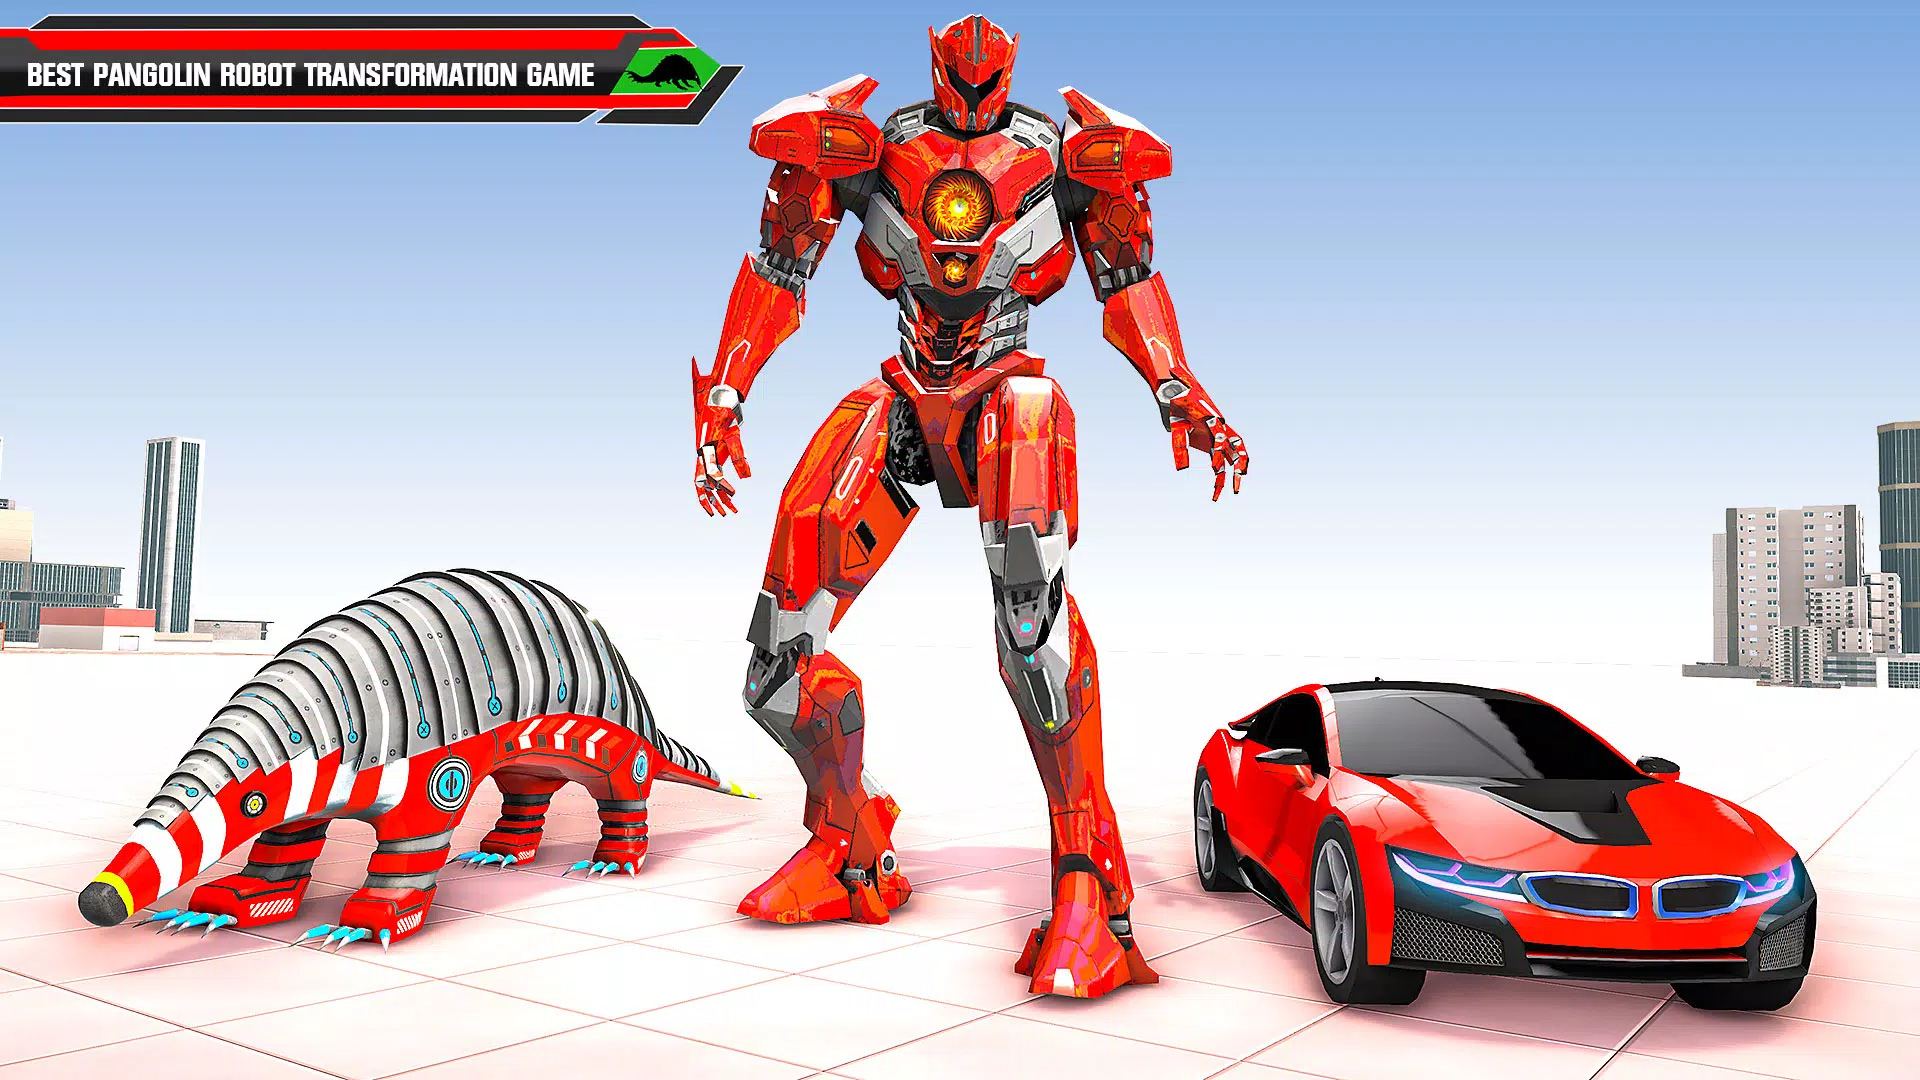 Robot Car Transforming Games Pangolin Robot Games for Android - APK Download